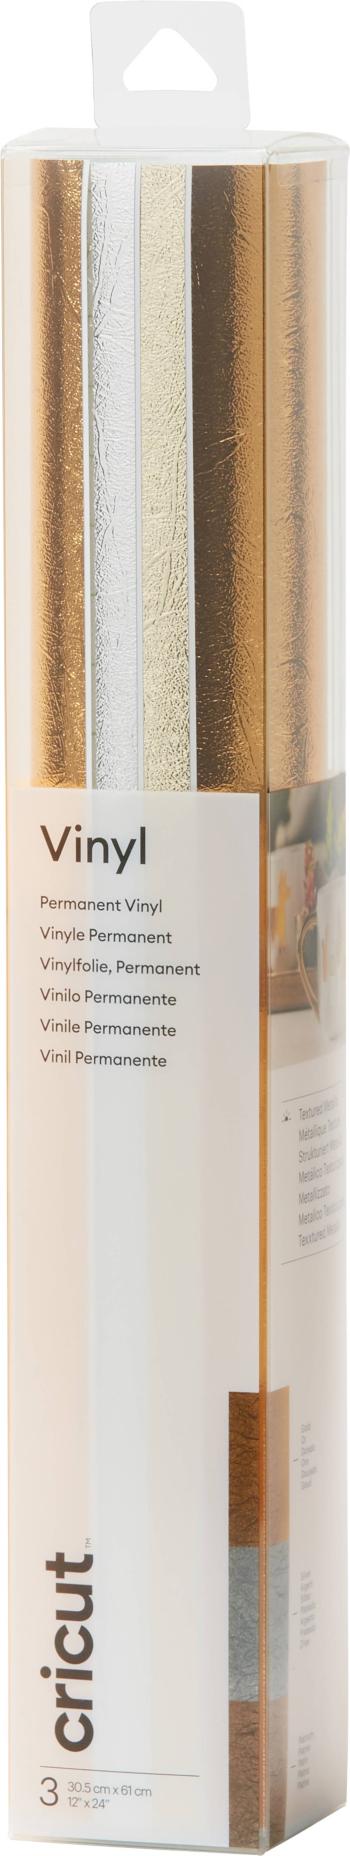 Cricut Premium Vinyl Permanent fólie  zlatá, strieborná, platina